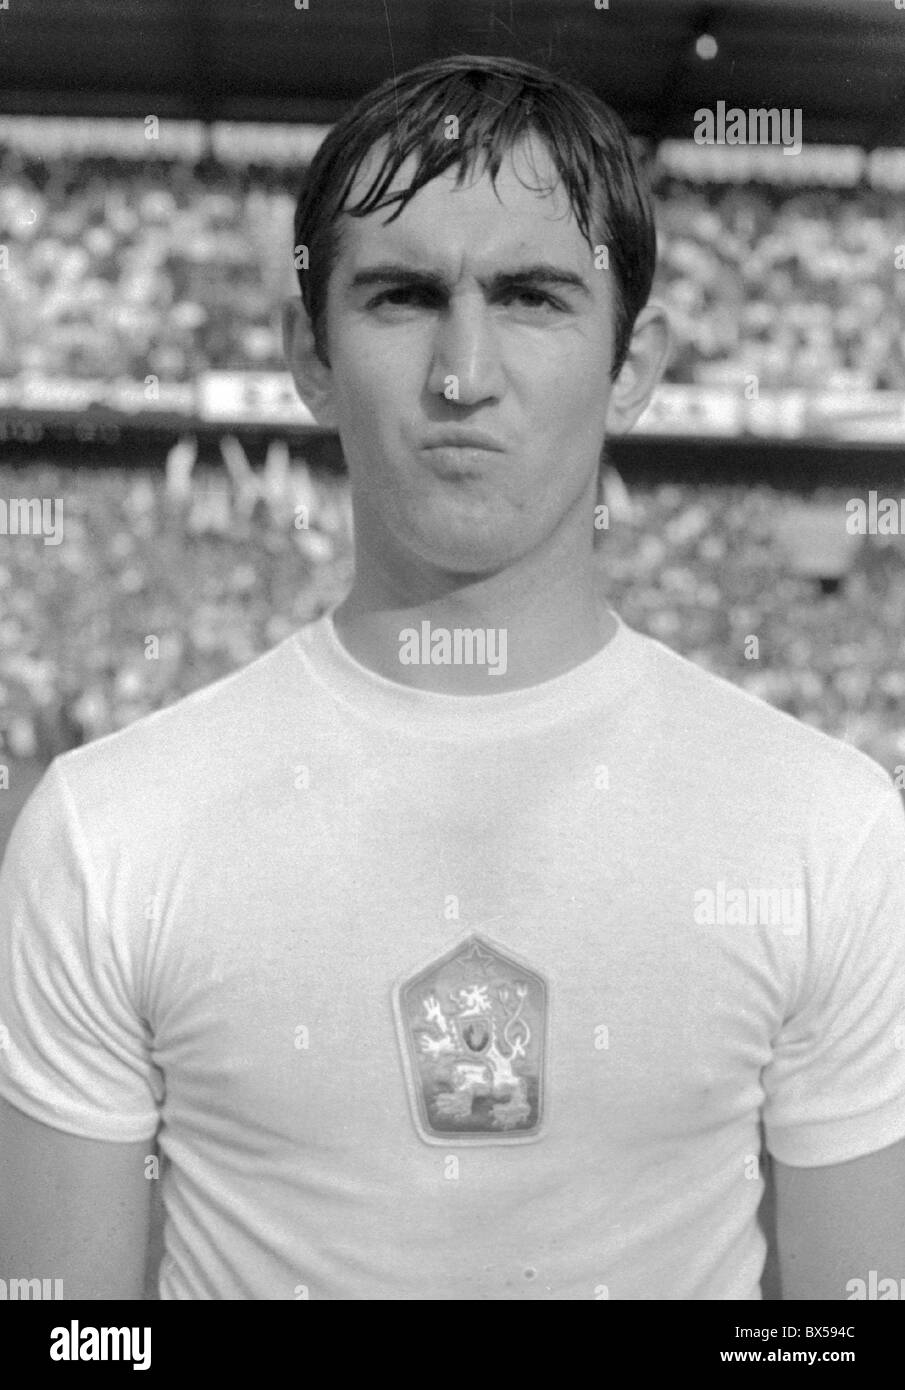 Czechoslovak national soccer team player Ladislav Kuna, October 1969. CTK Photo/Zdenek Havelka Stock Photo